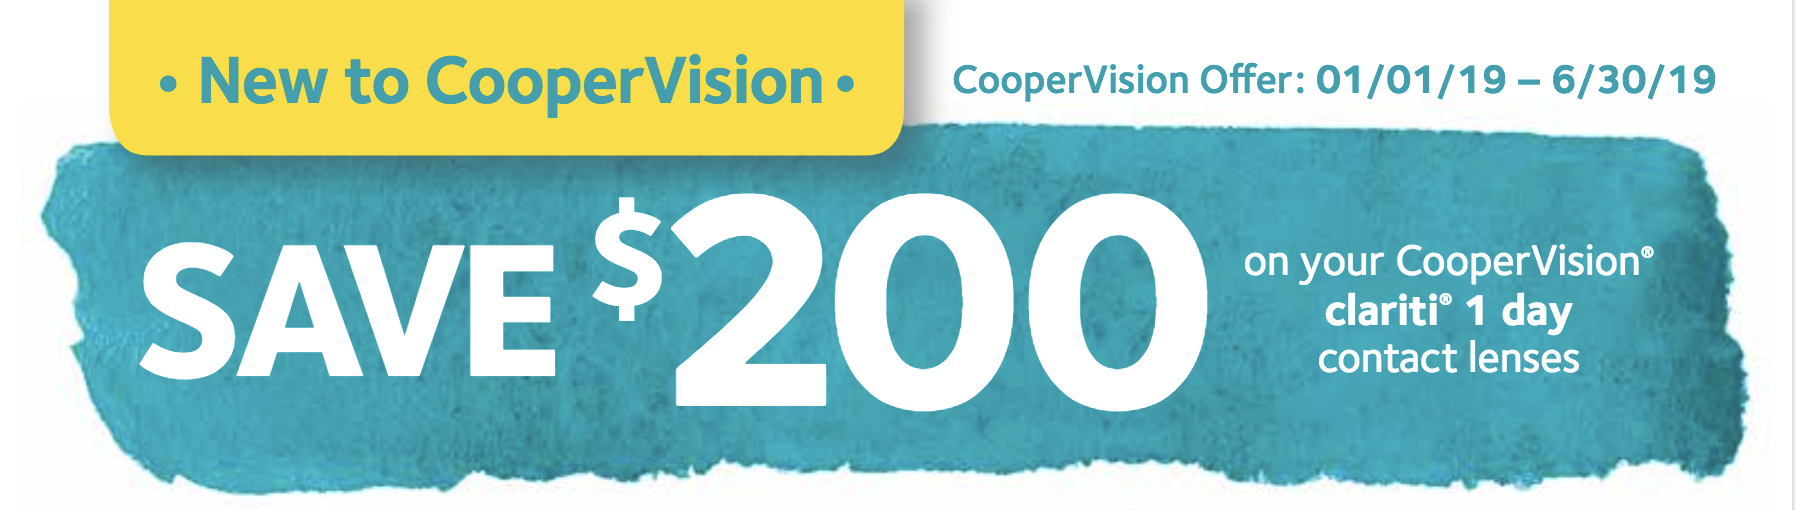 coopervision-rebates-in-corpus-christi-tx-bay-area-vision